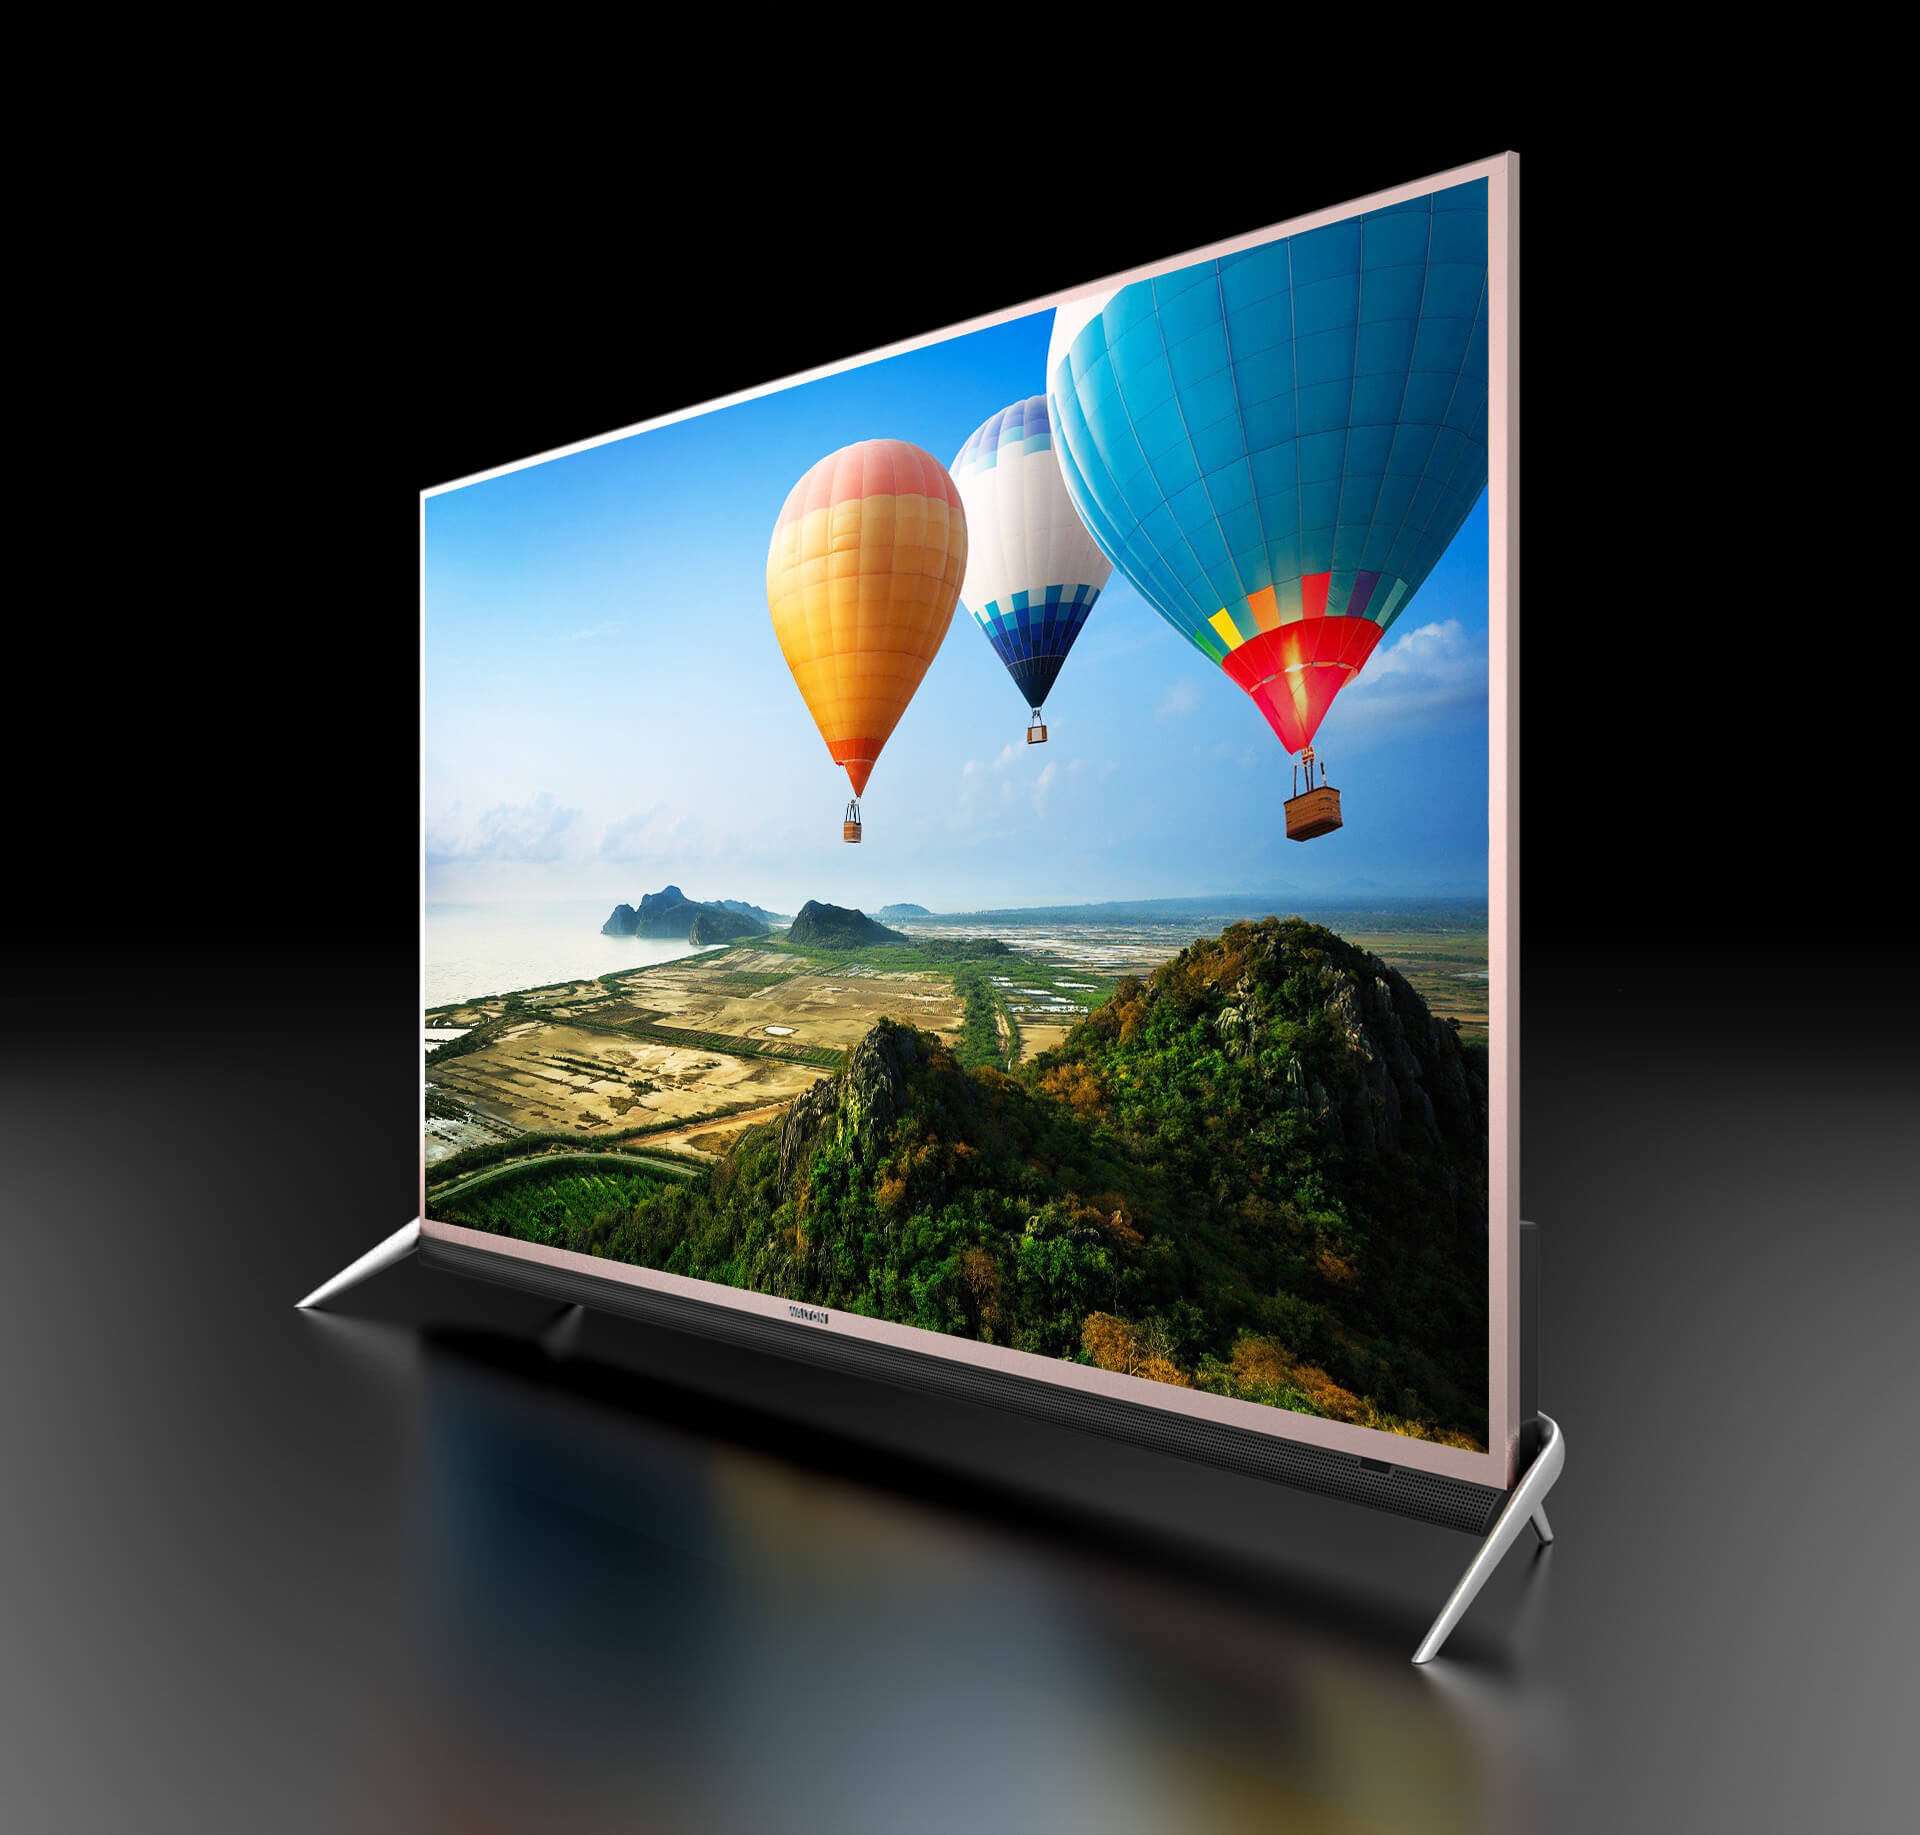 Walton 43-inch Smart Android TV FHD Diamu